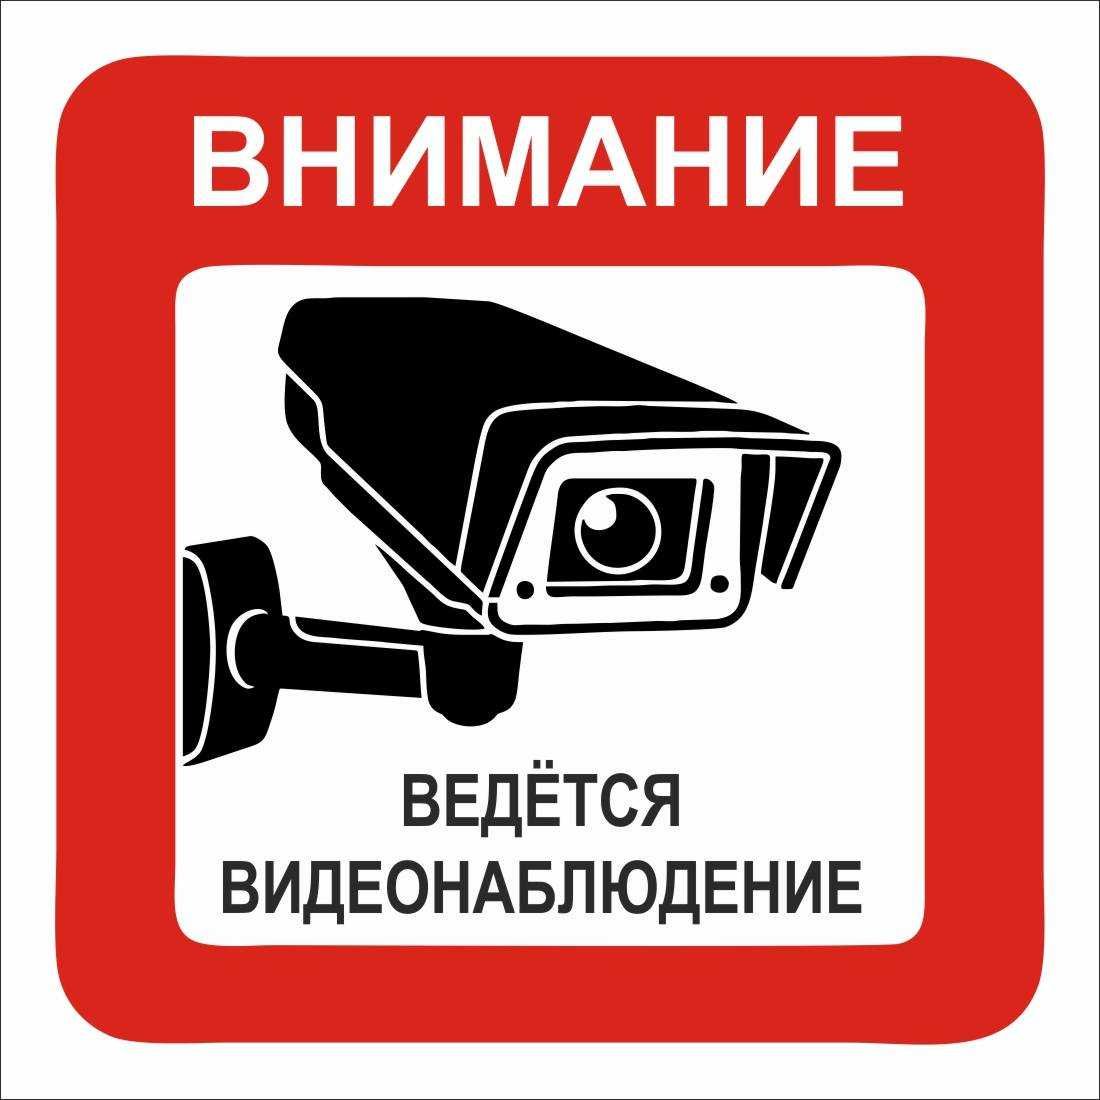 Kamera ustanovka-remont/ Установка камера видеонаблюдения